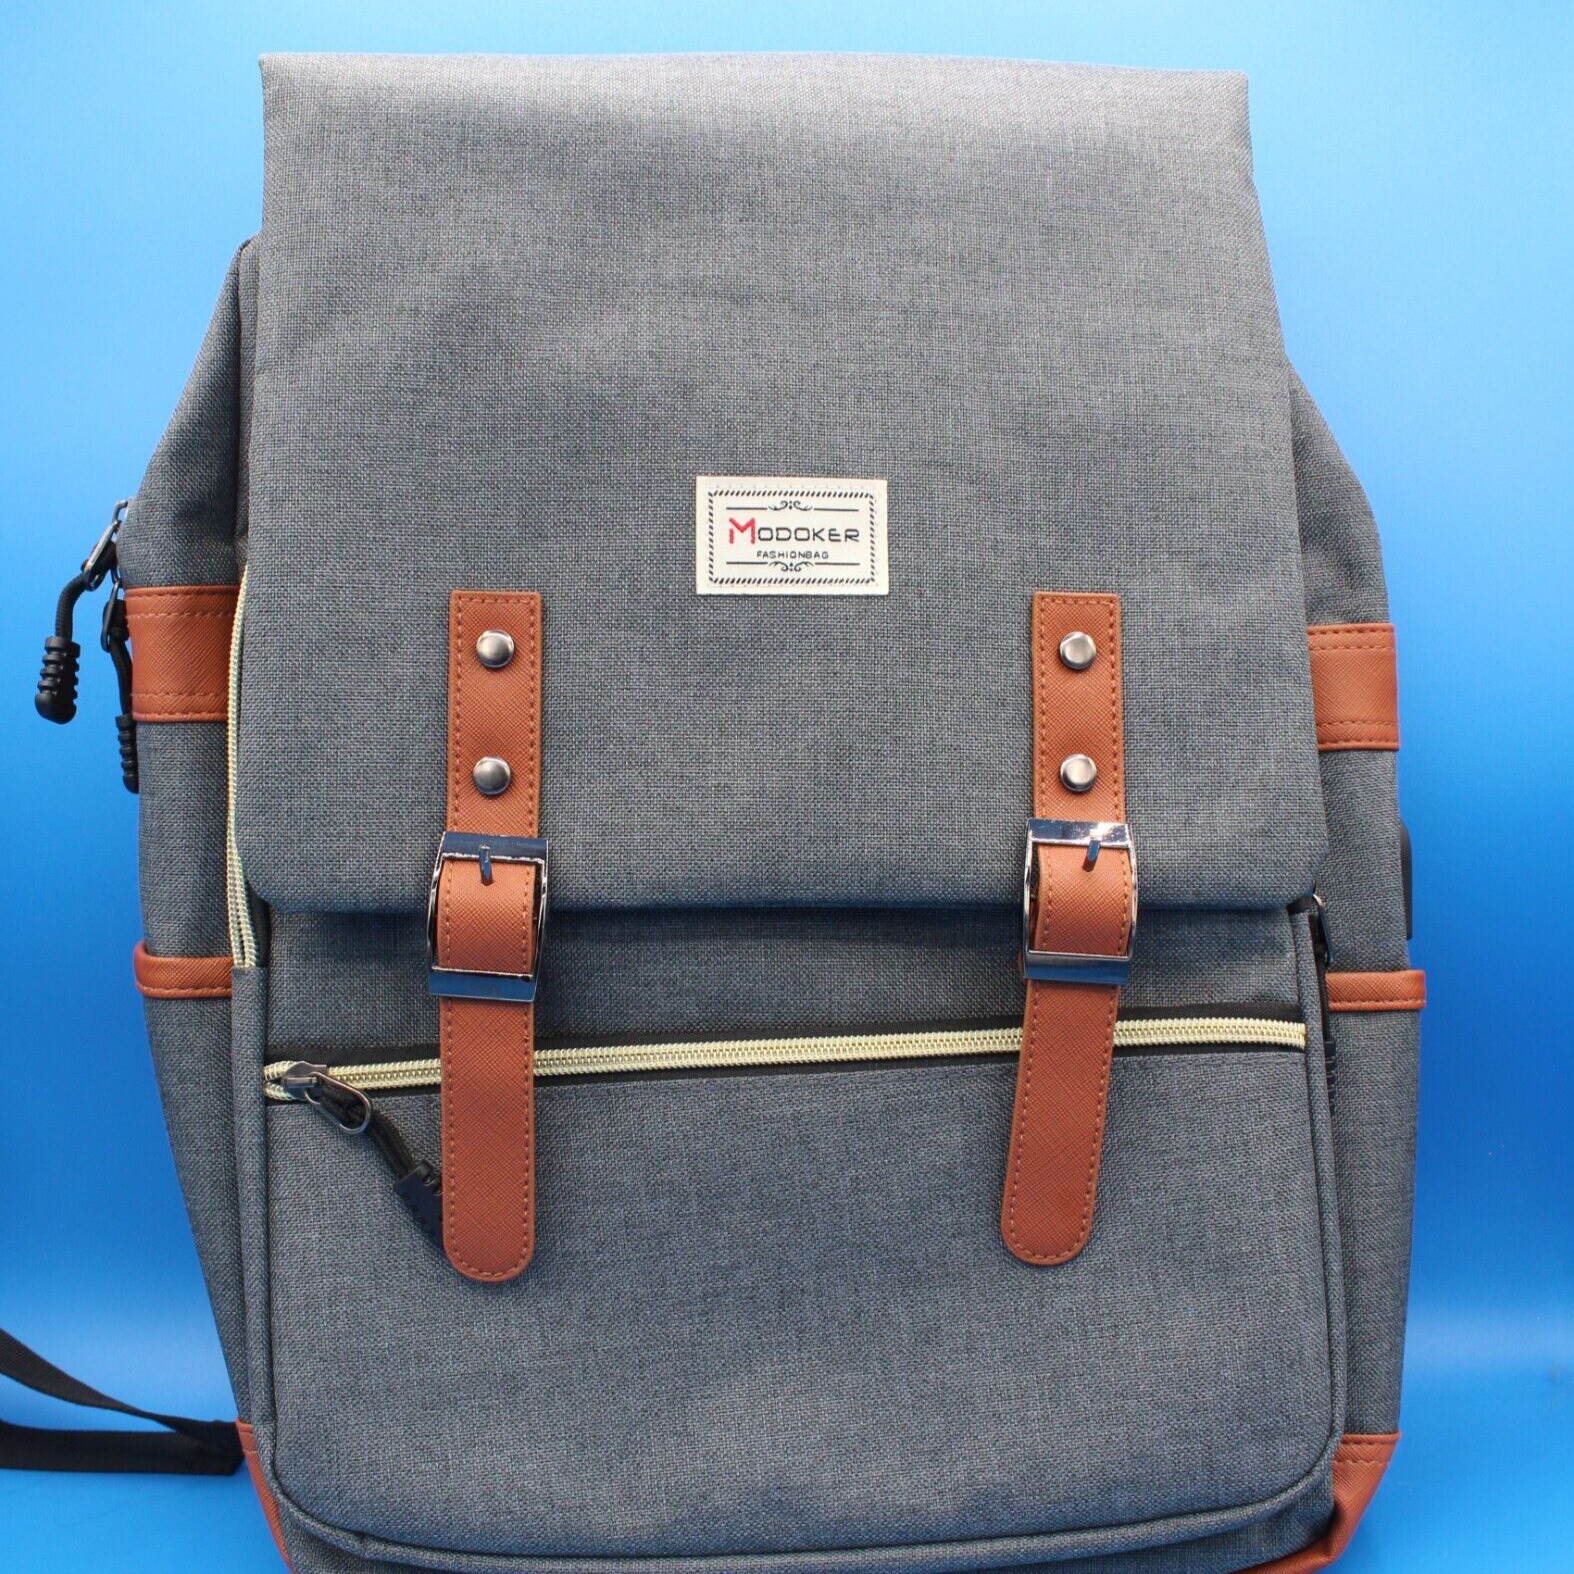 Modoker Vintage look Laptop Backpack Fashion Bag w/ USB Charging Gray Excellent